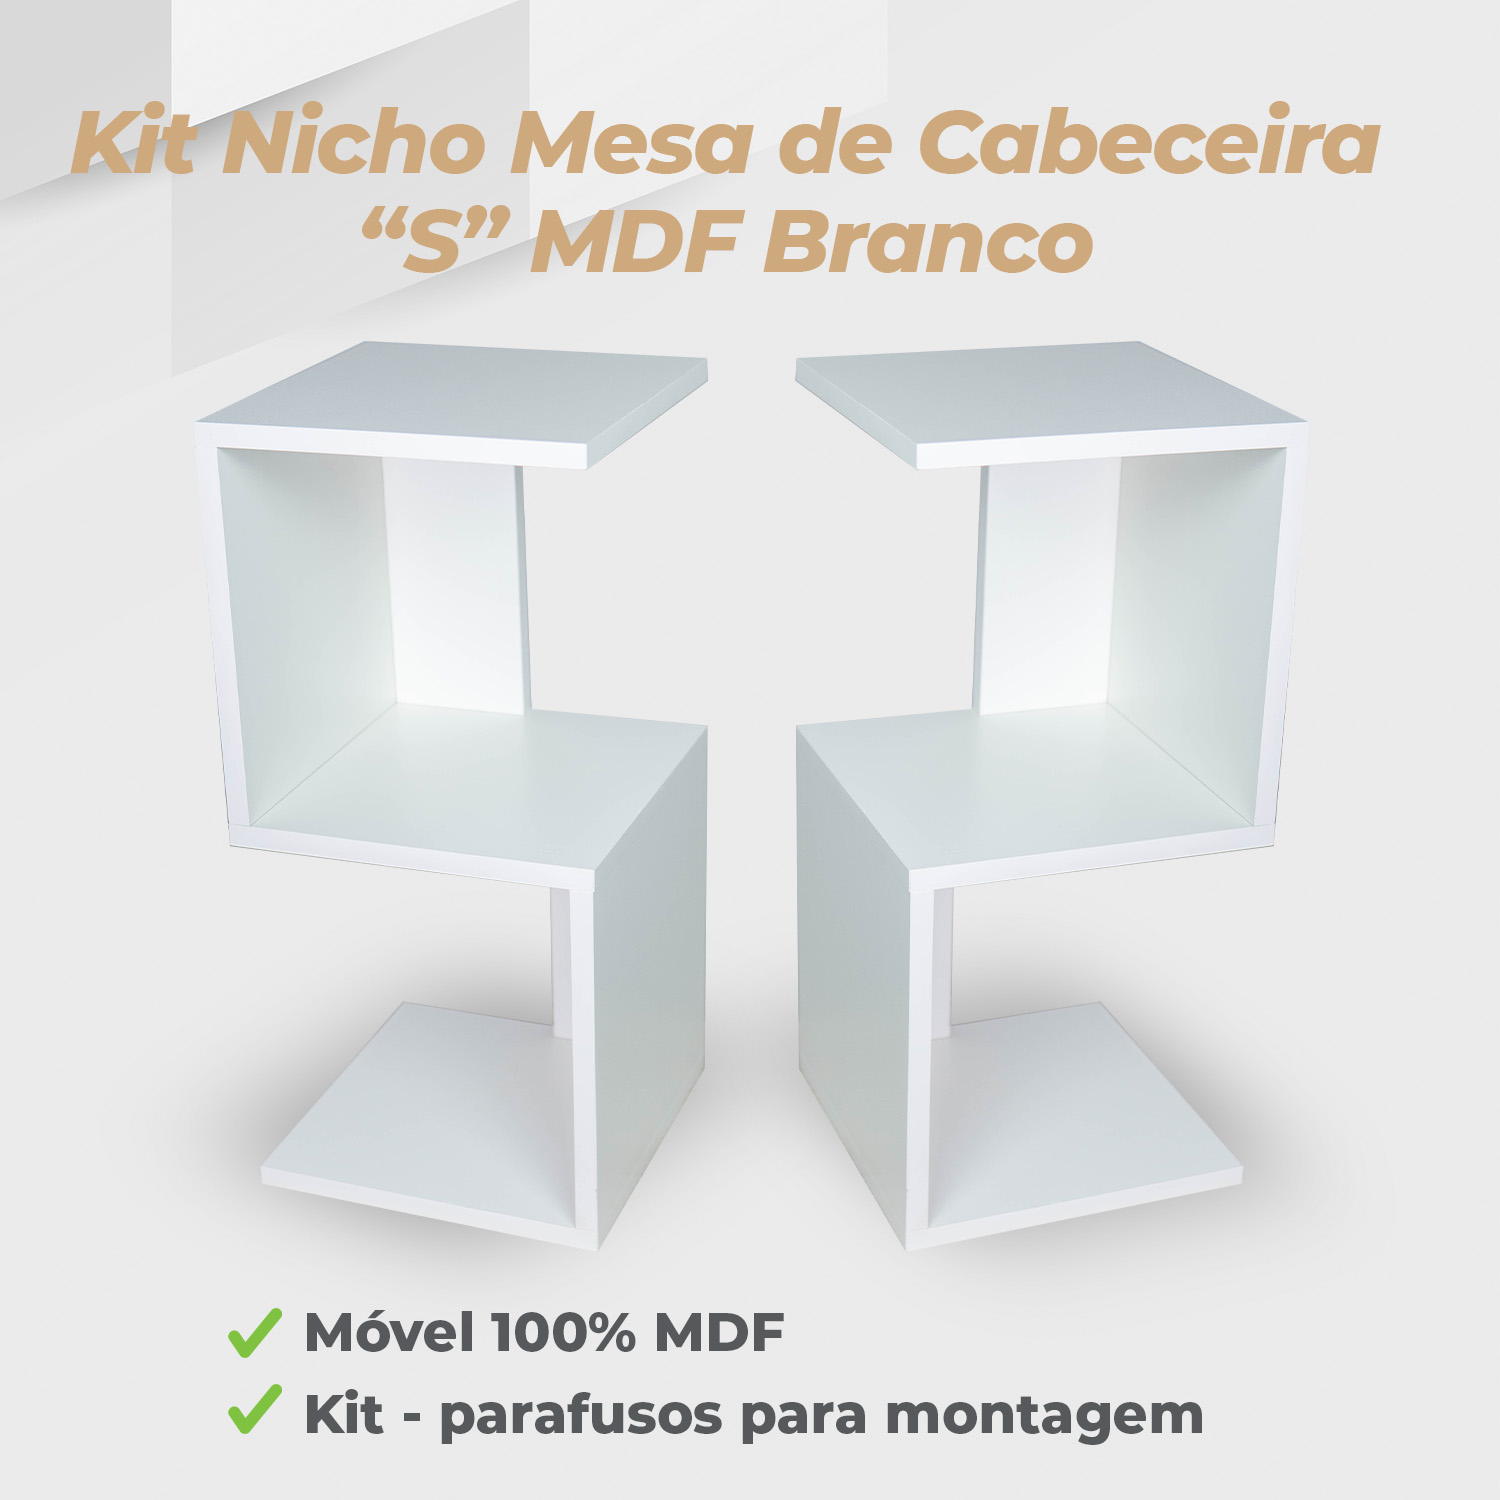 Kit Nicho Mesa De Cabeceira Modelo S MDF Branco - 2 Unidades